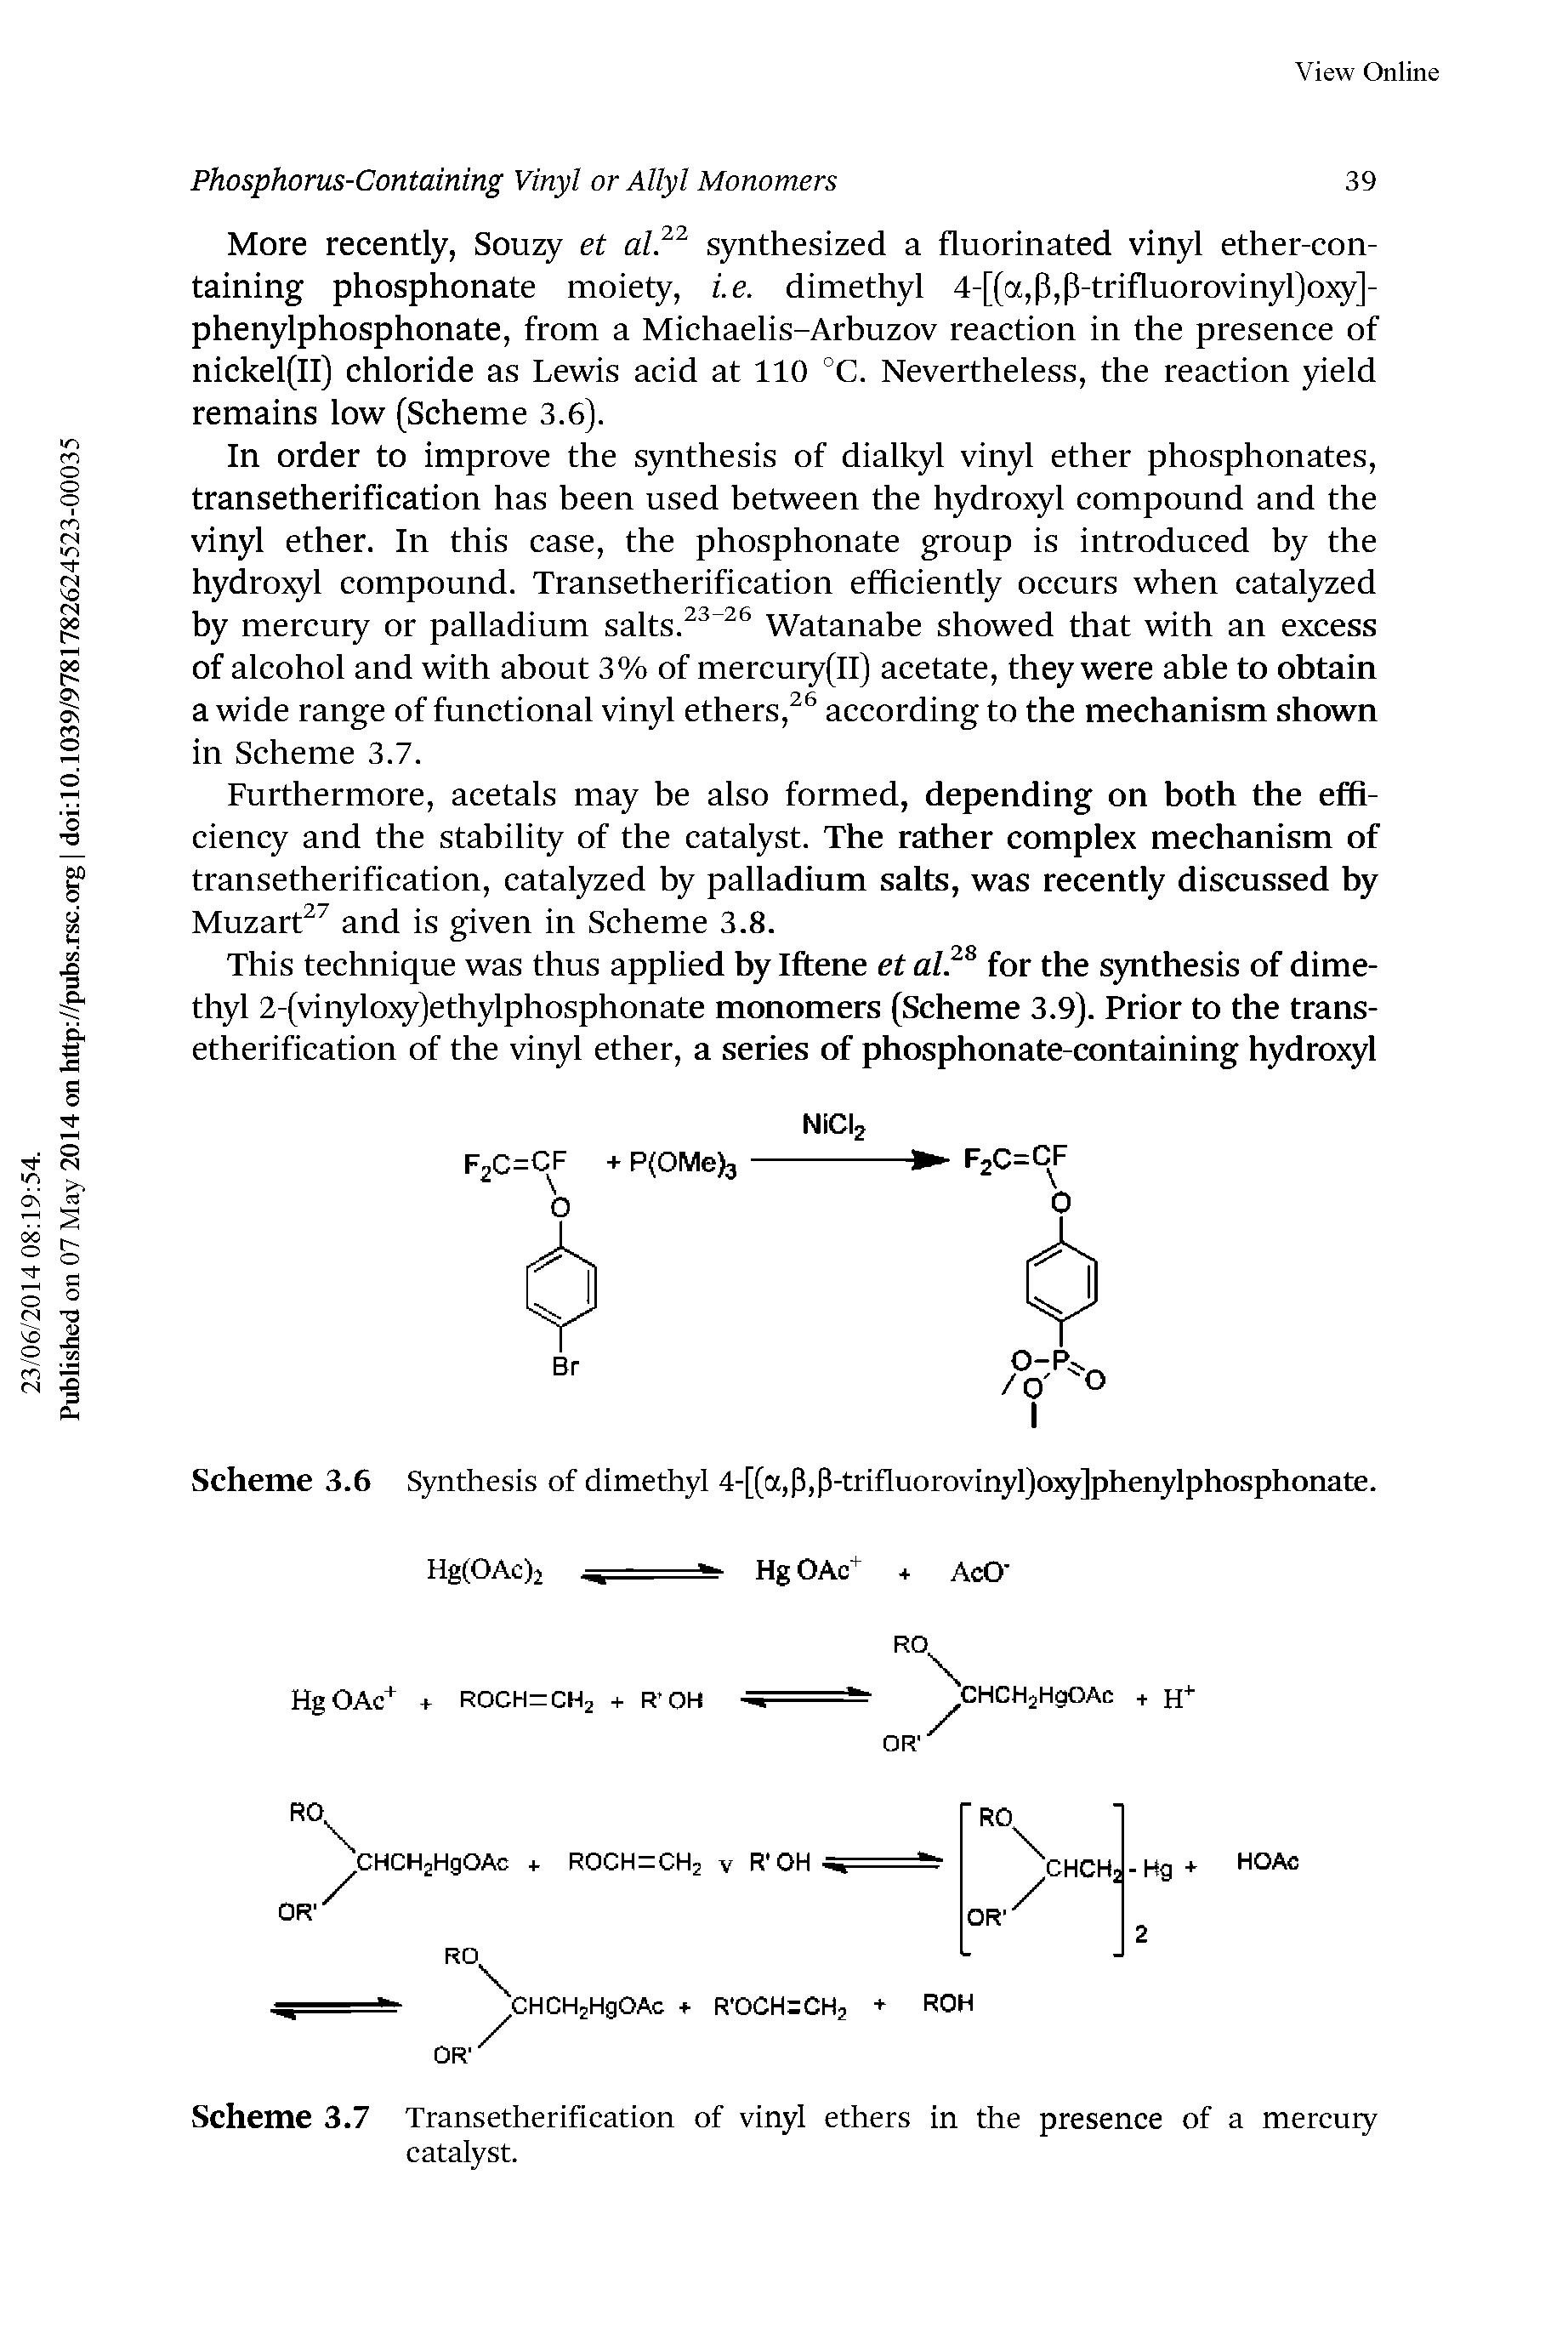 Scheme 3.6 S mthesis of dimethyl 4-[(a,P,P-trifluorovinyl)o3gr]phenylphosphonate.